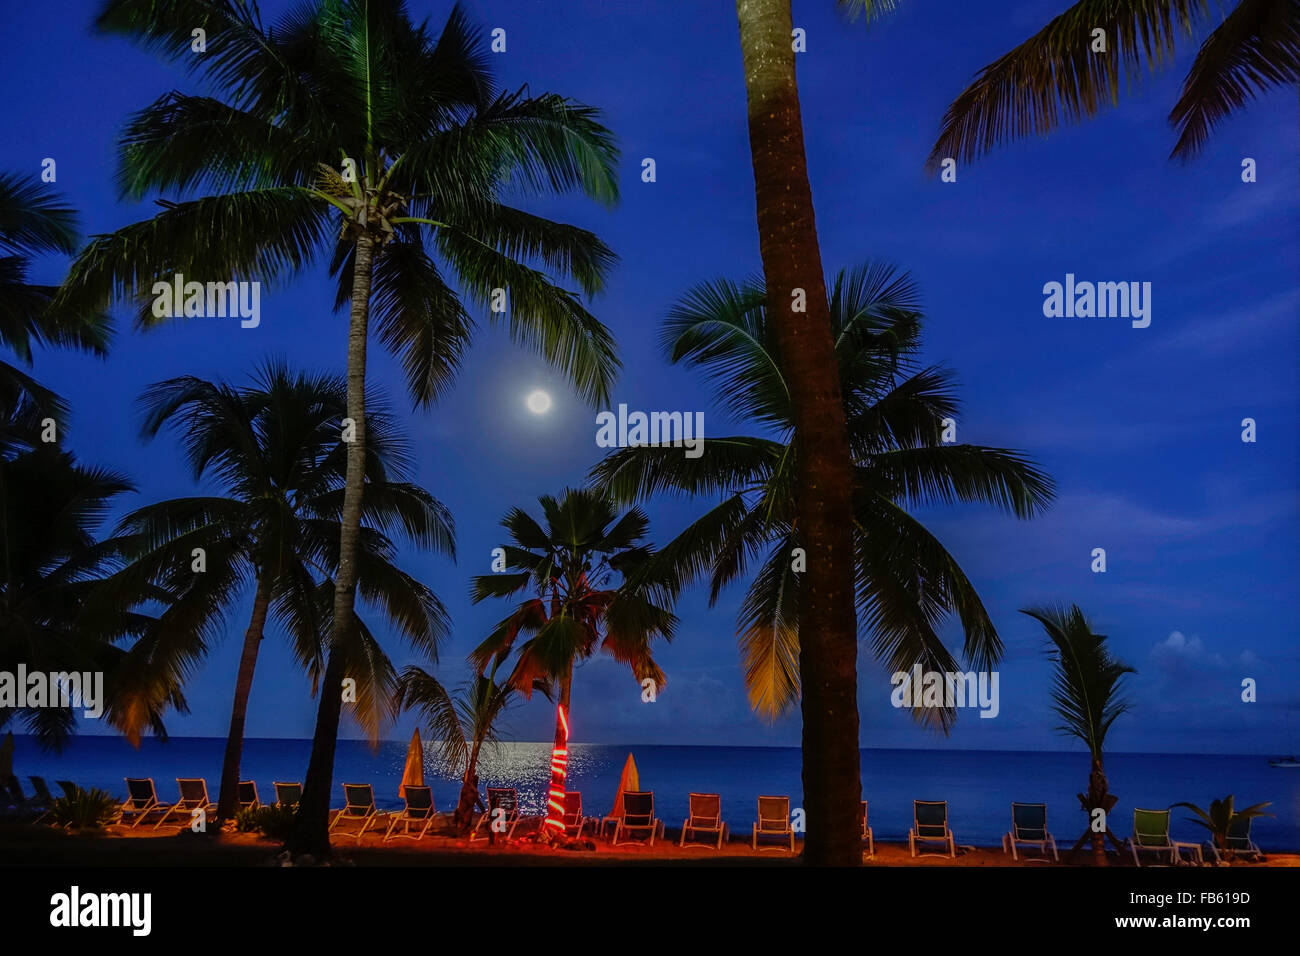 a full moon struggles through the clouds over the Caribbean sea. A palm tree beach scene. St. Croix, US Virgin Islands. USVI, U.S.V.I. Stock Photo